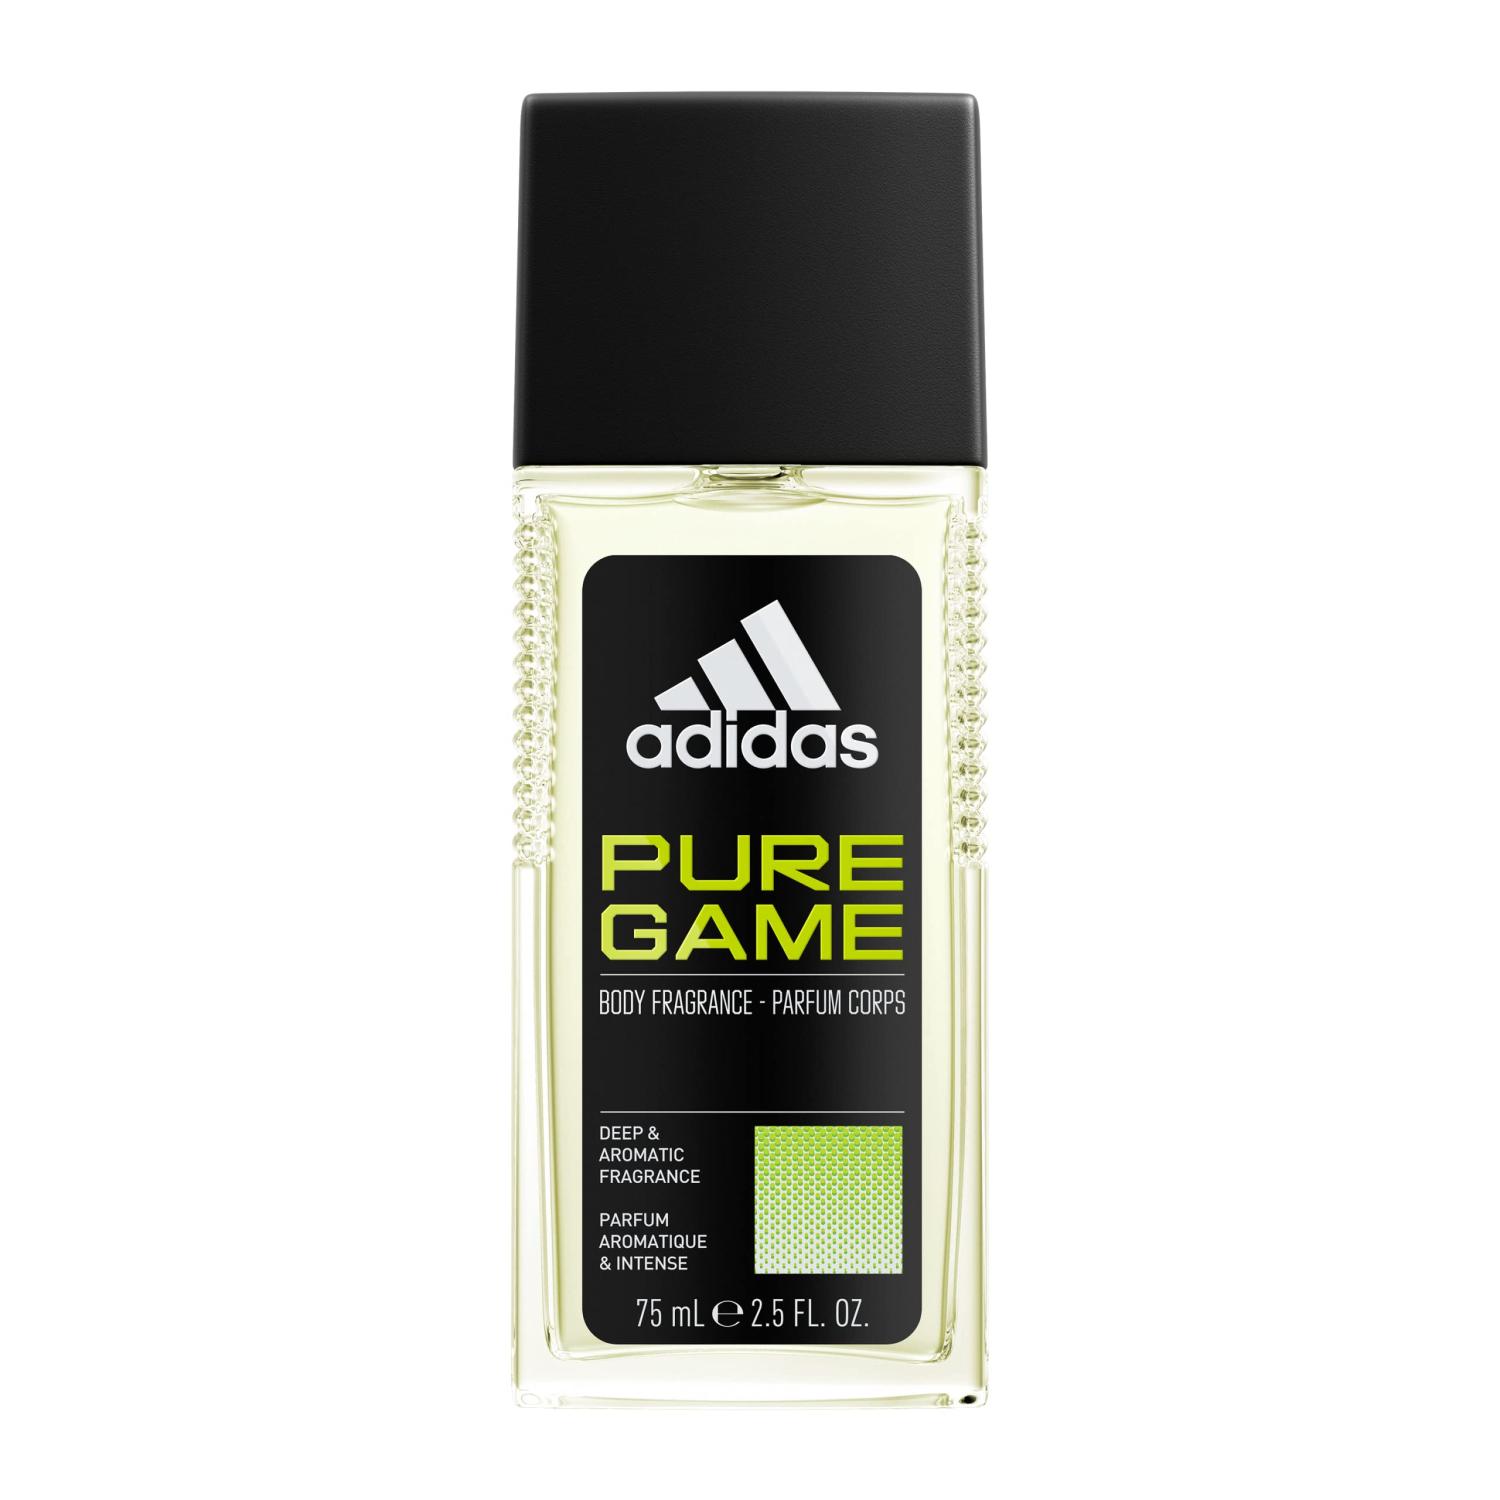 Gebruikelijk prins kom adidas Pure Game Body Fragrance for Men, 2.5 fl oz